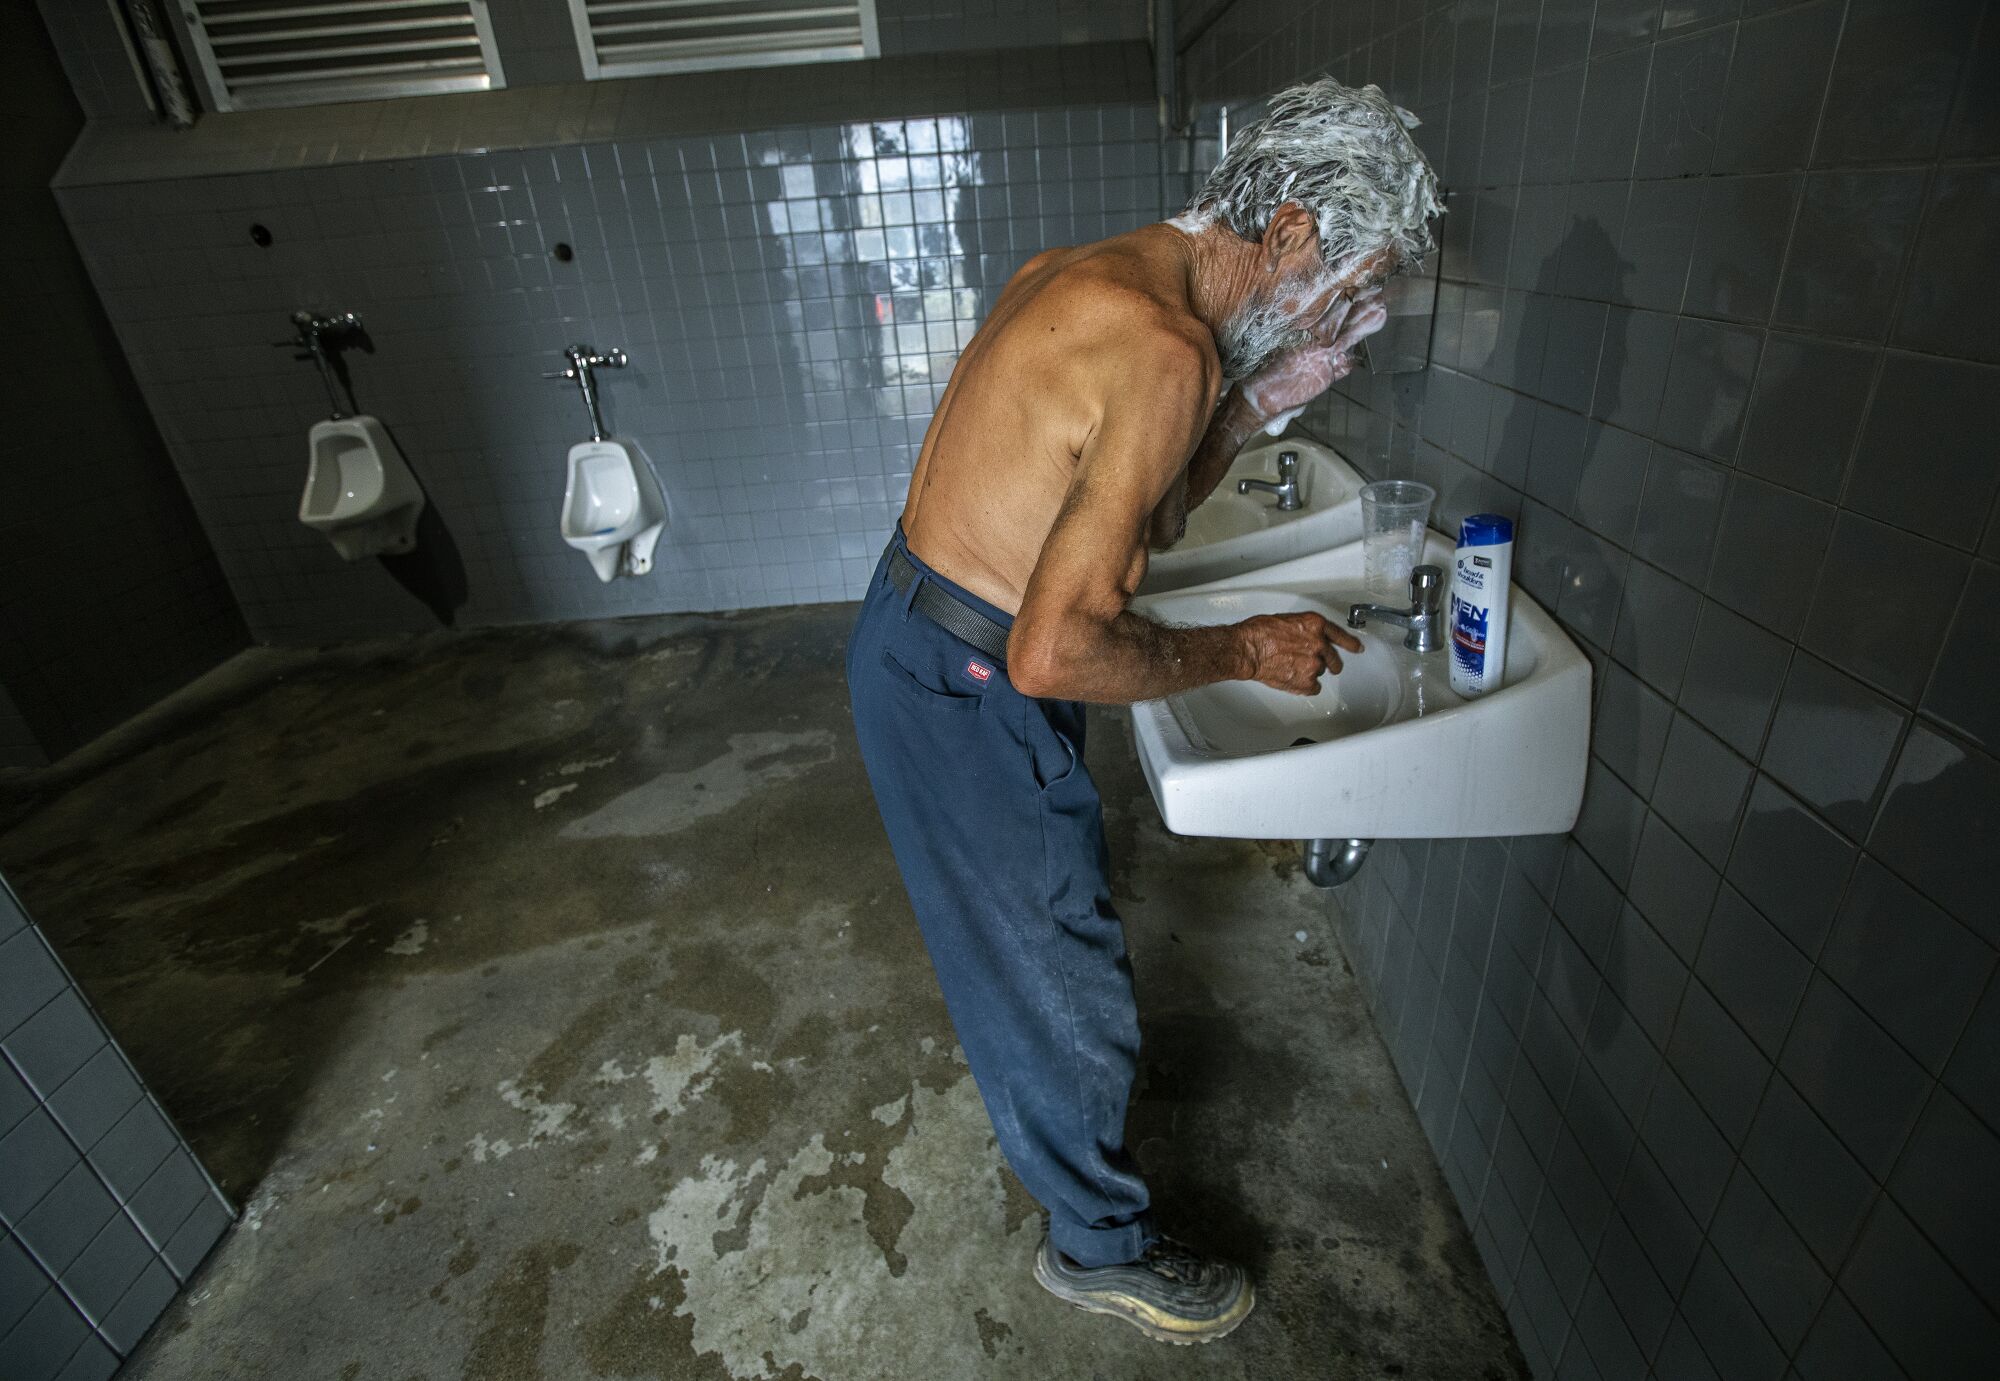 Augustine Hurtado washes his hair inside a restroom at Santa Monica State Beach.